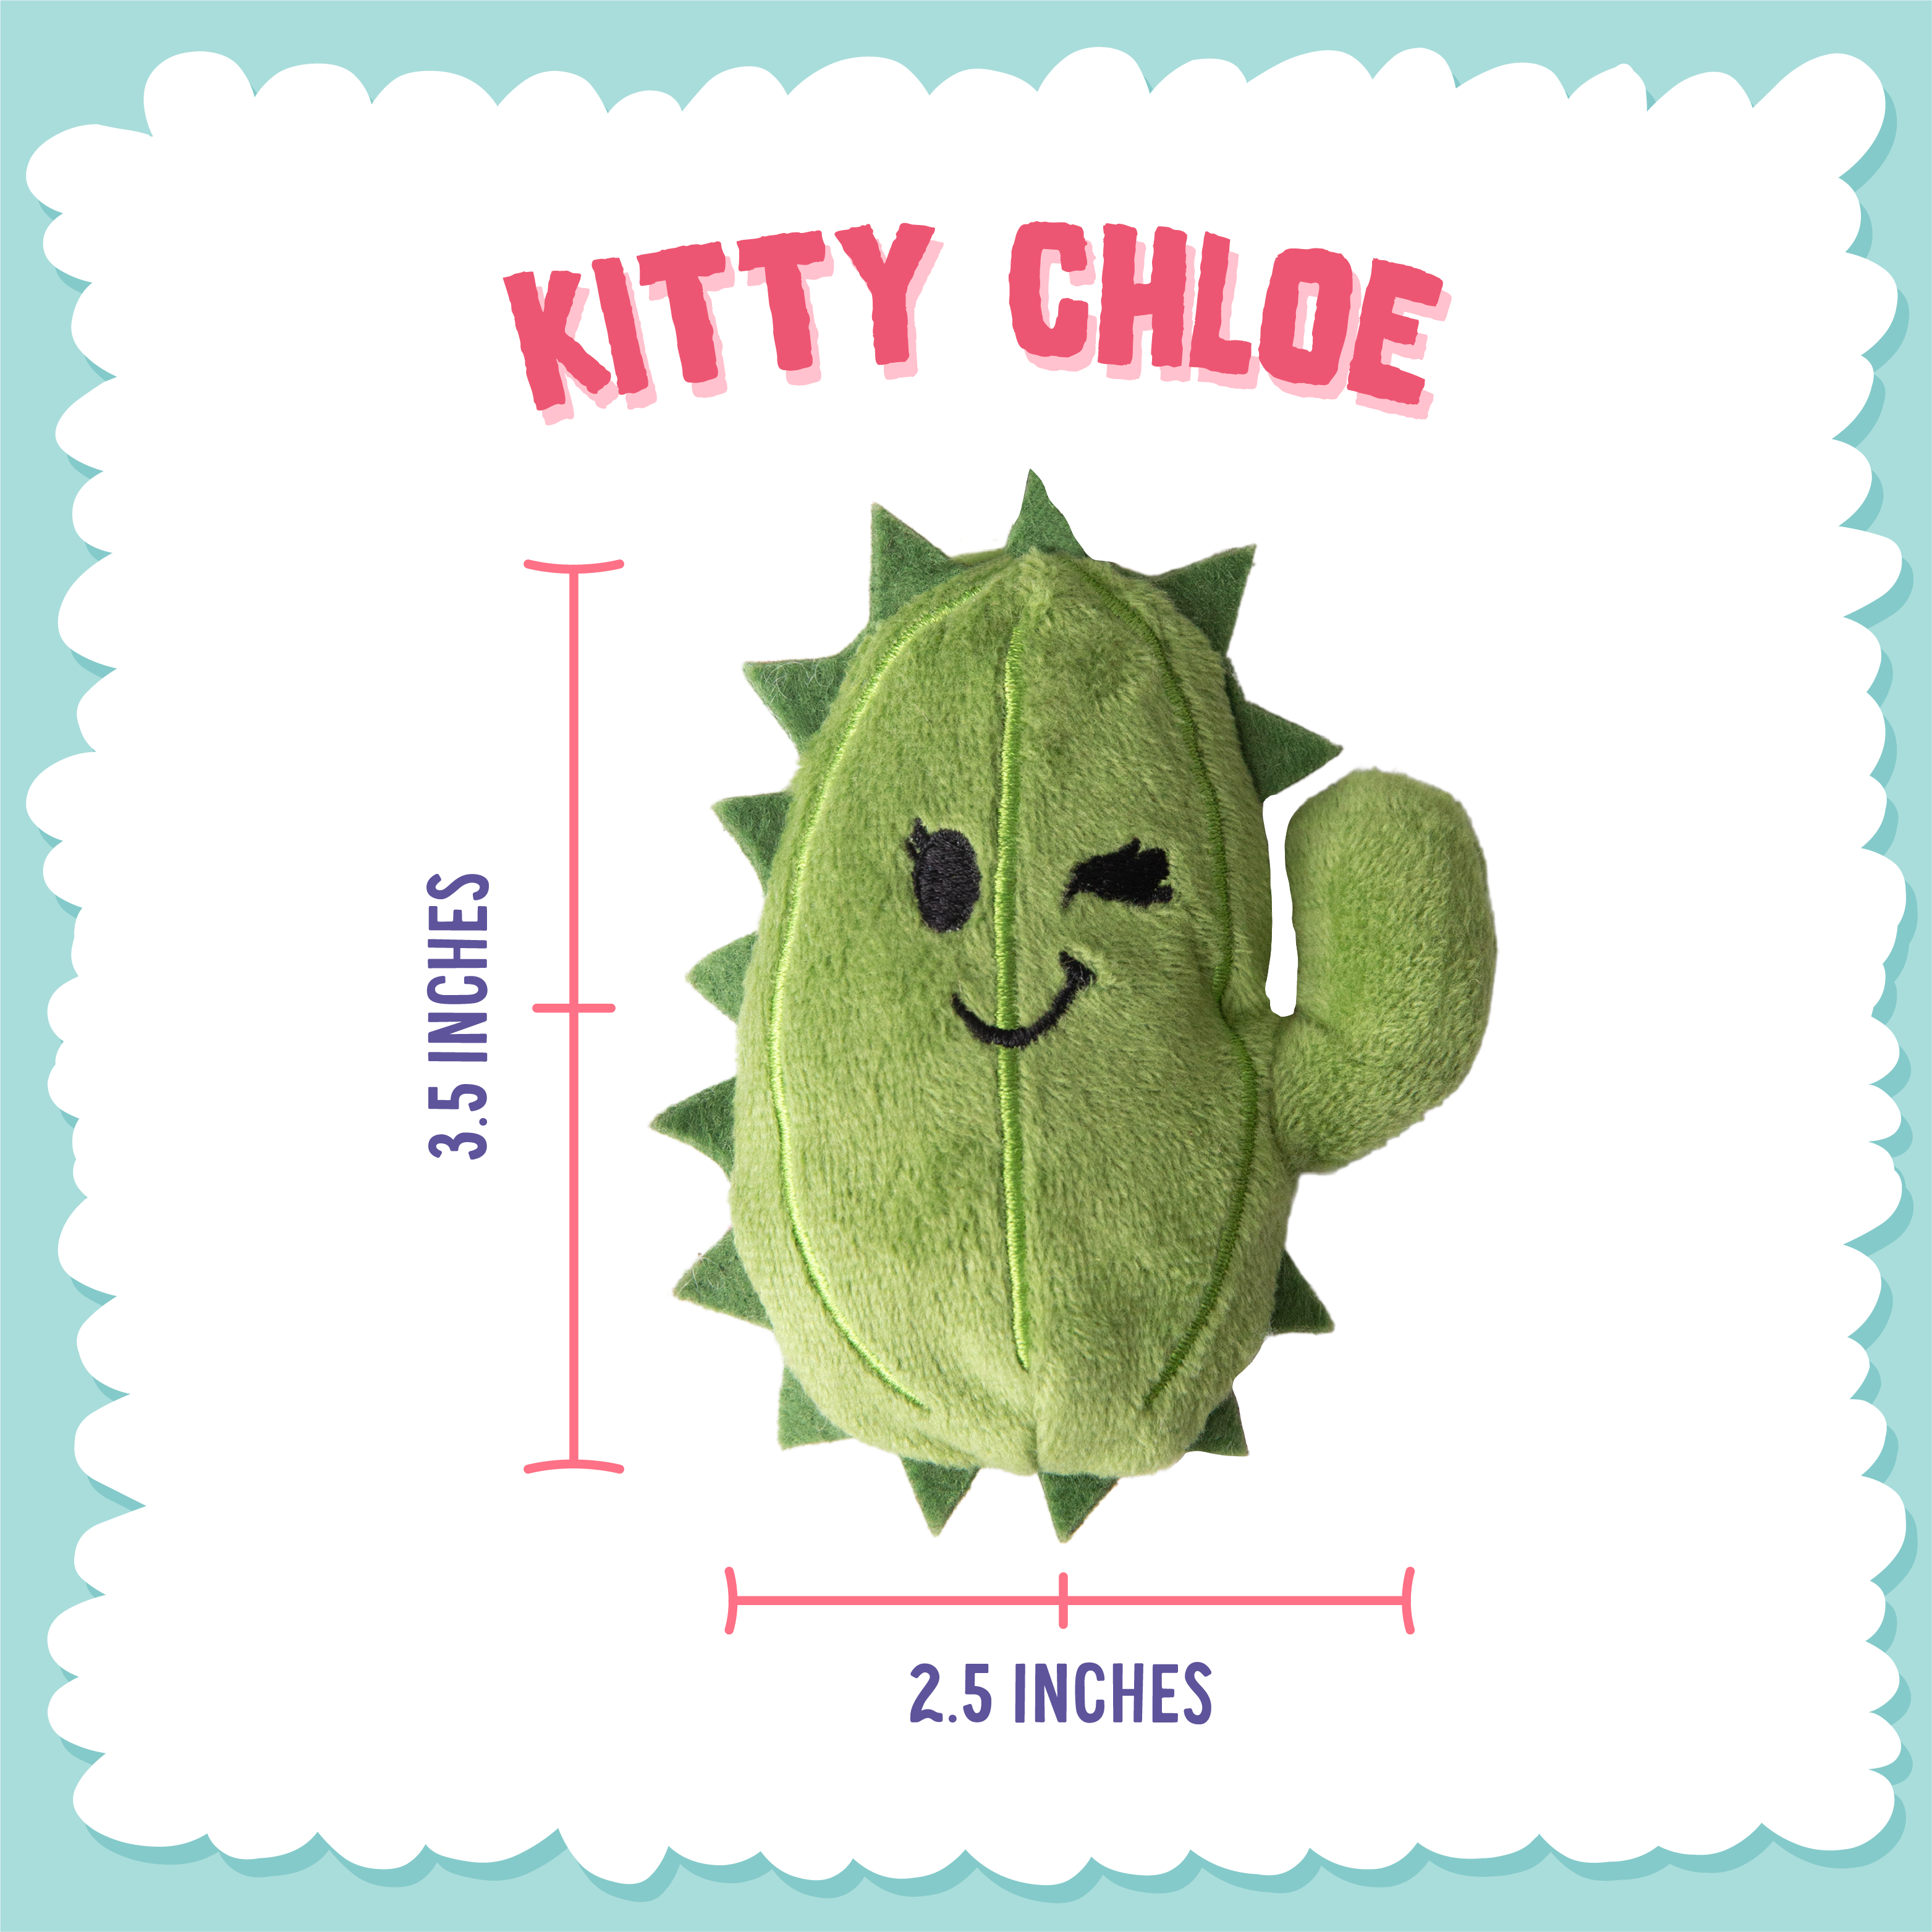 Kitty Chloe